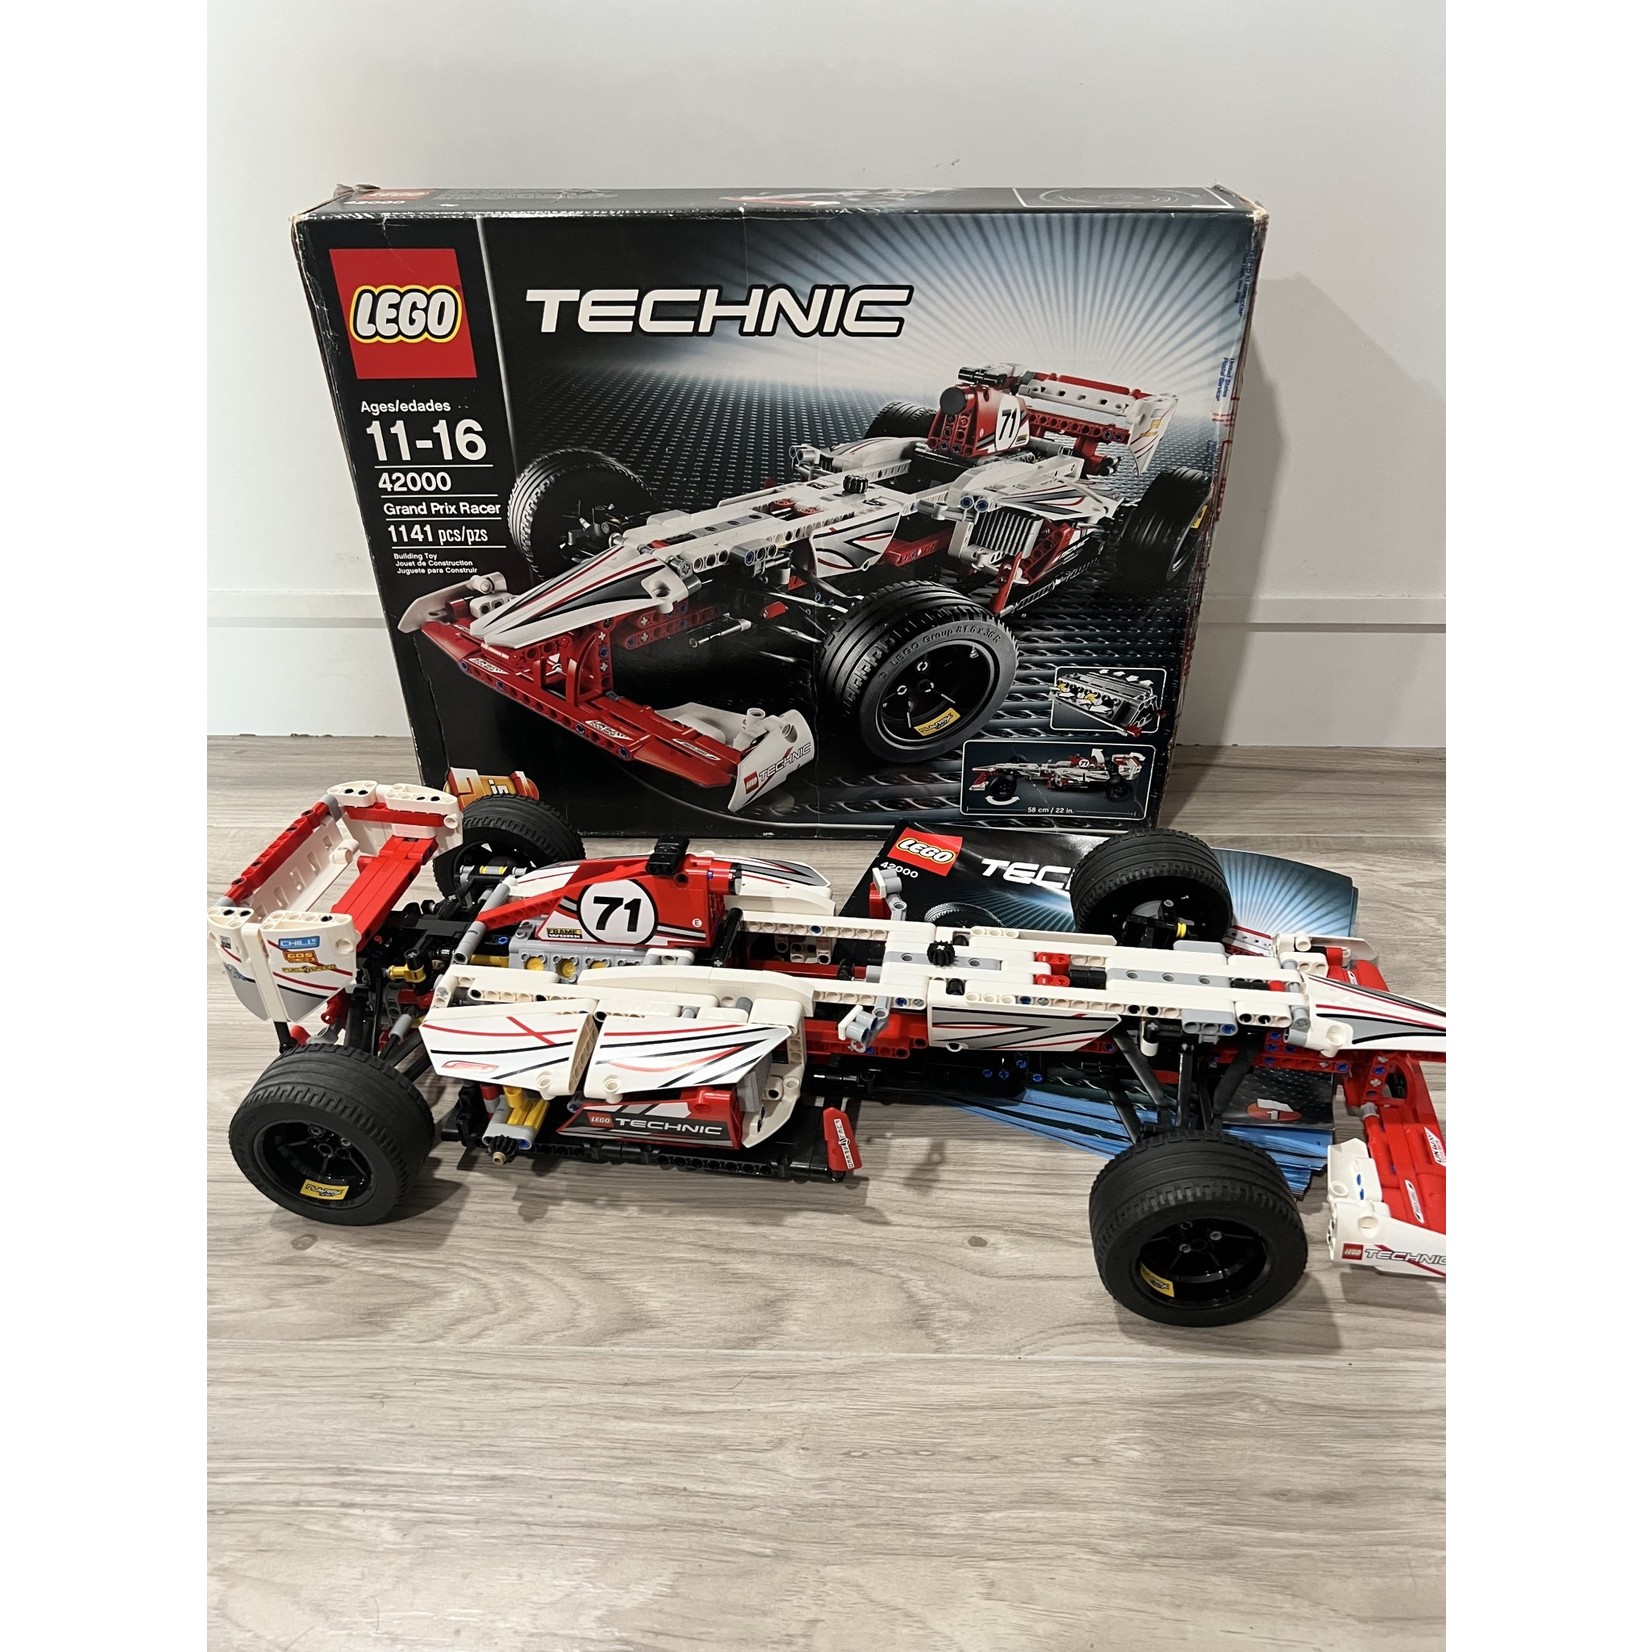 discolor Konsultere kommando LEGO LEGO Technic Grand Prix Racer 42000 - USED - Rocket City Toys